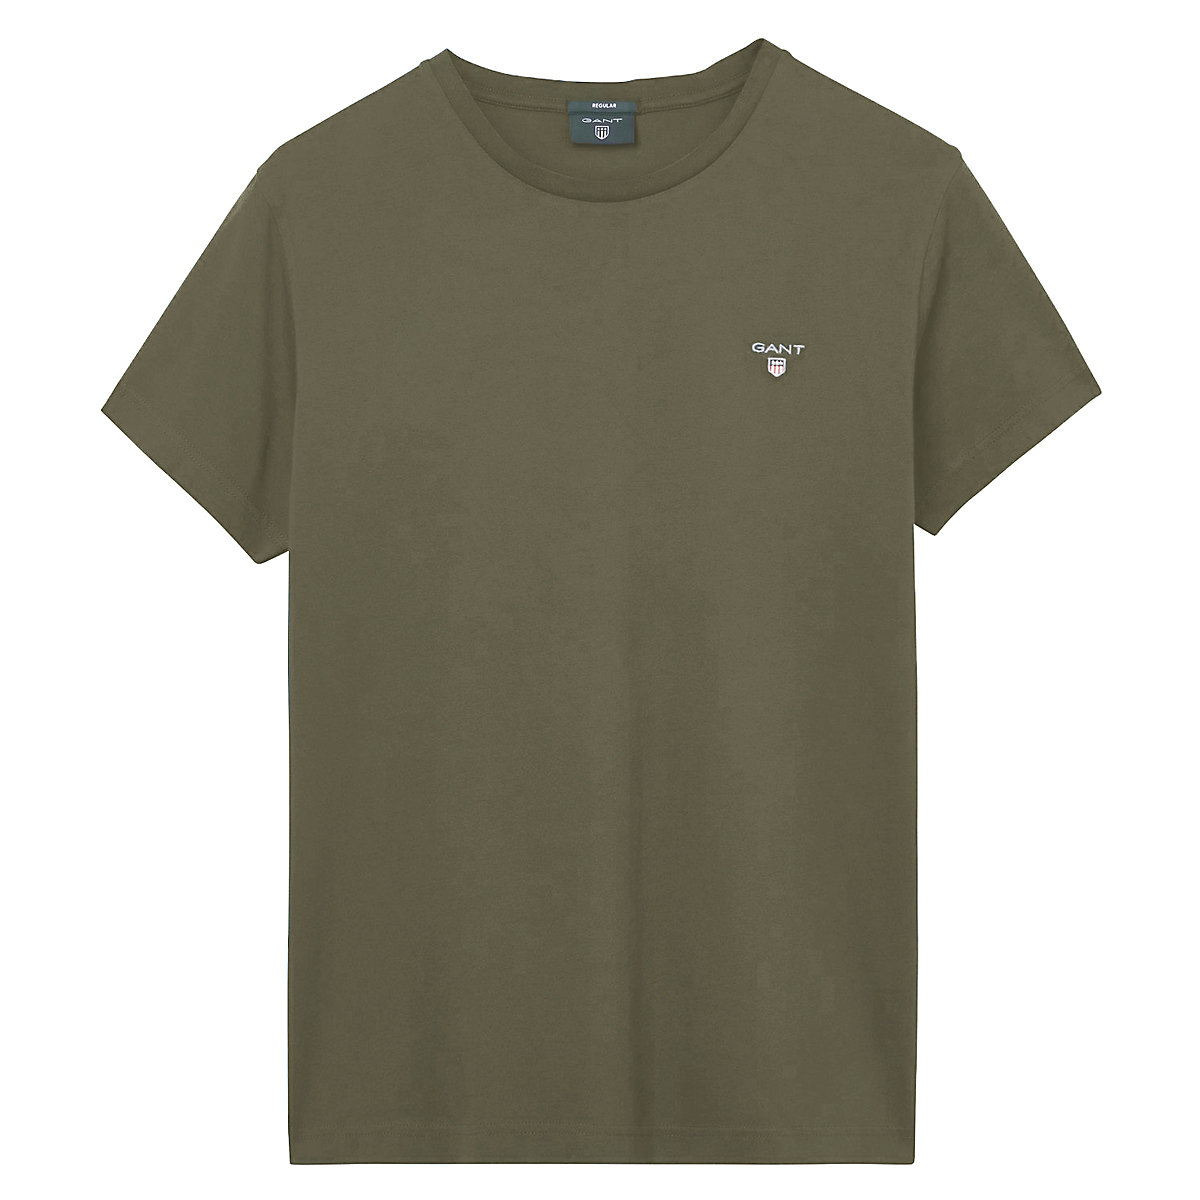 GANT Herren T-Shirt kurzarm Original T-Shirt Rundhals Baumwolle T-Shirts grün